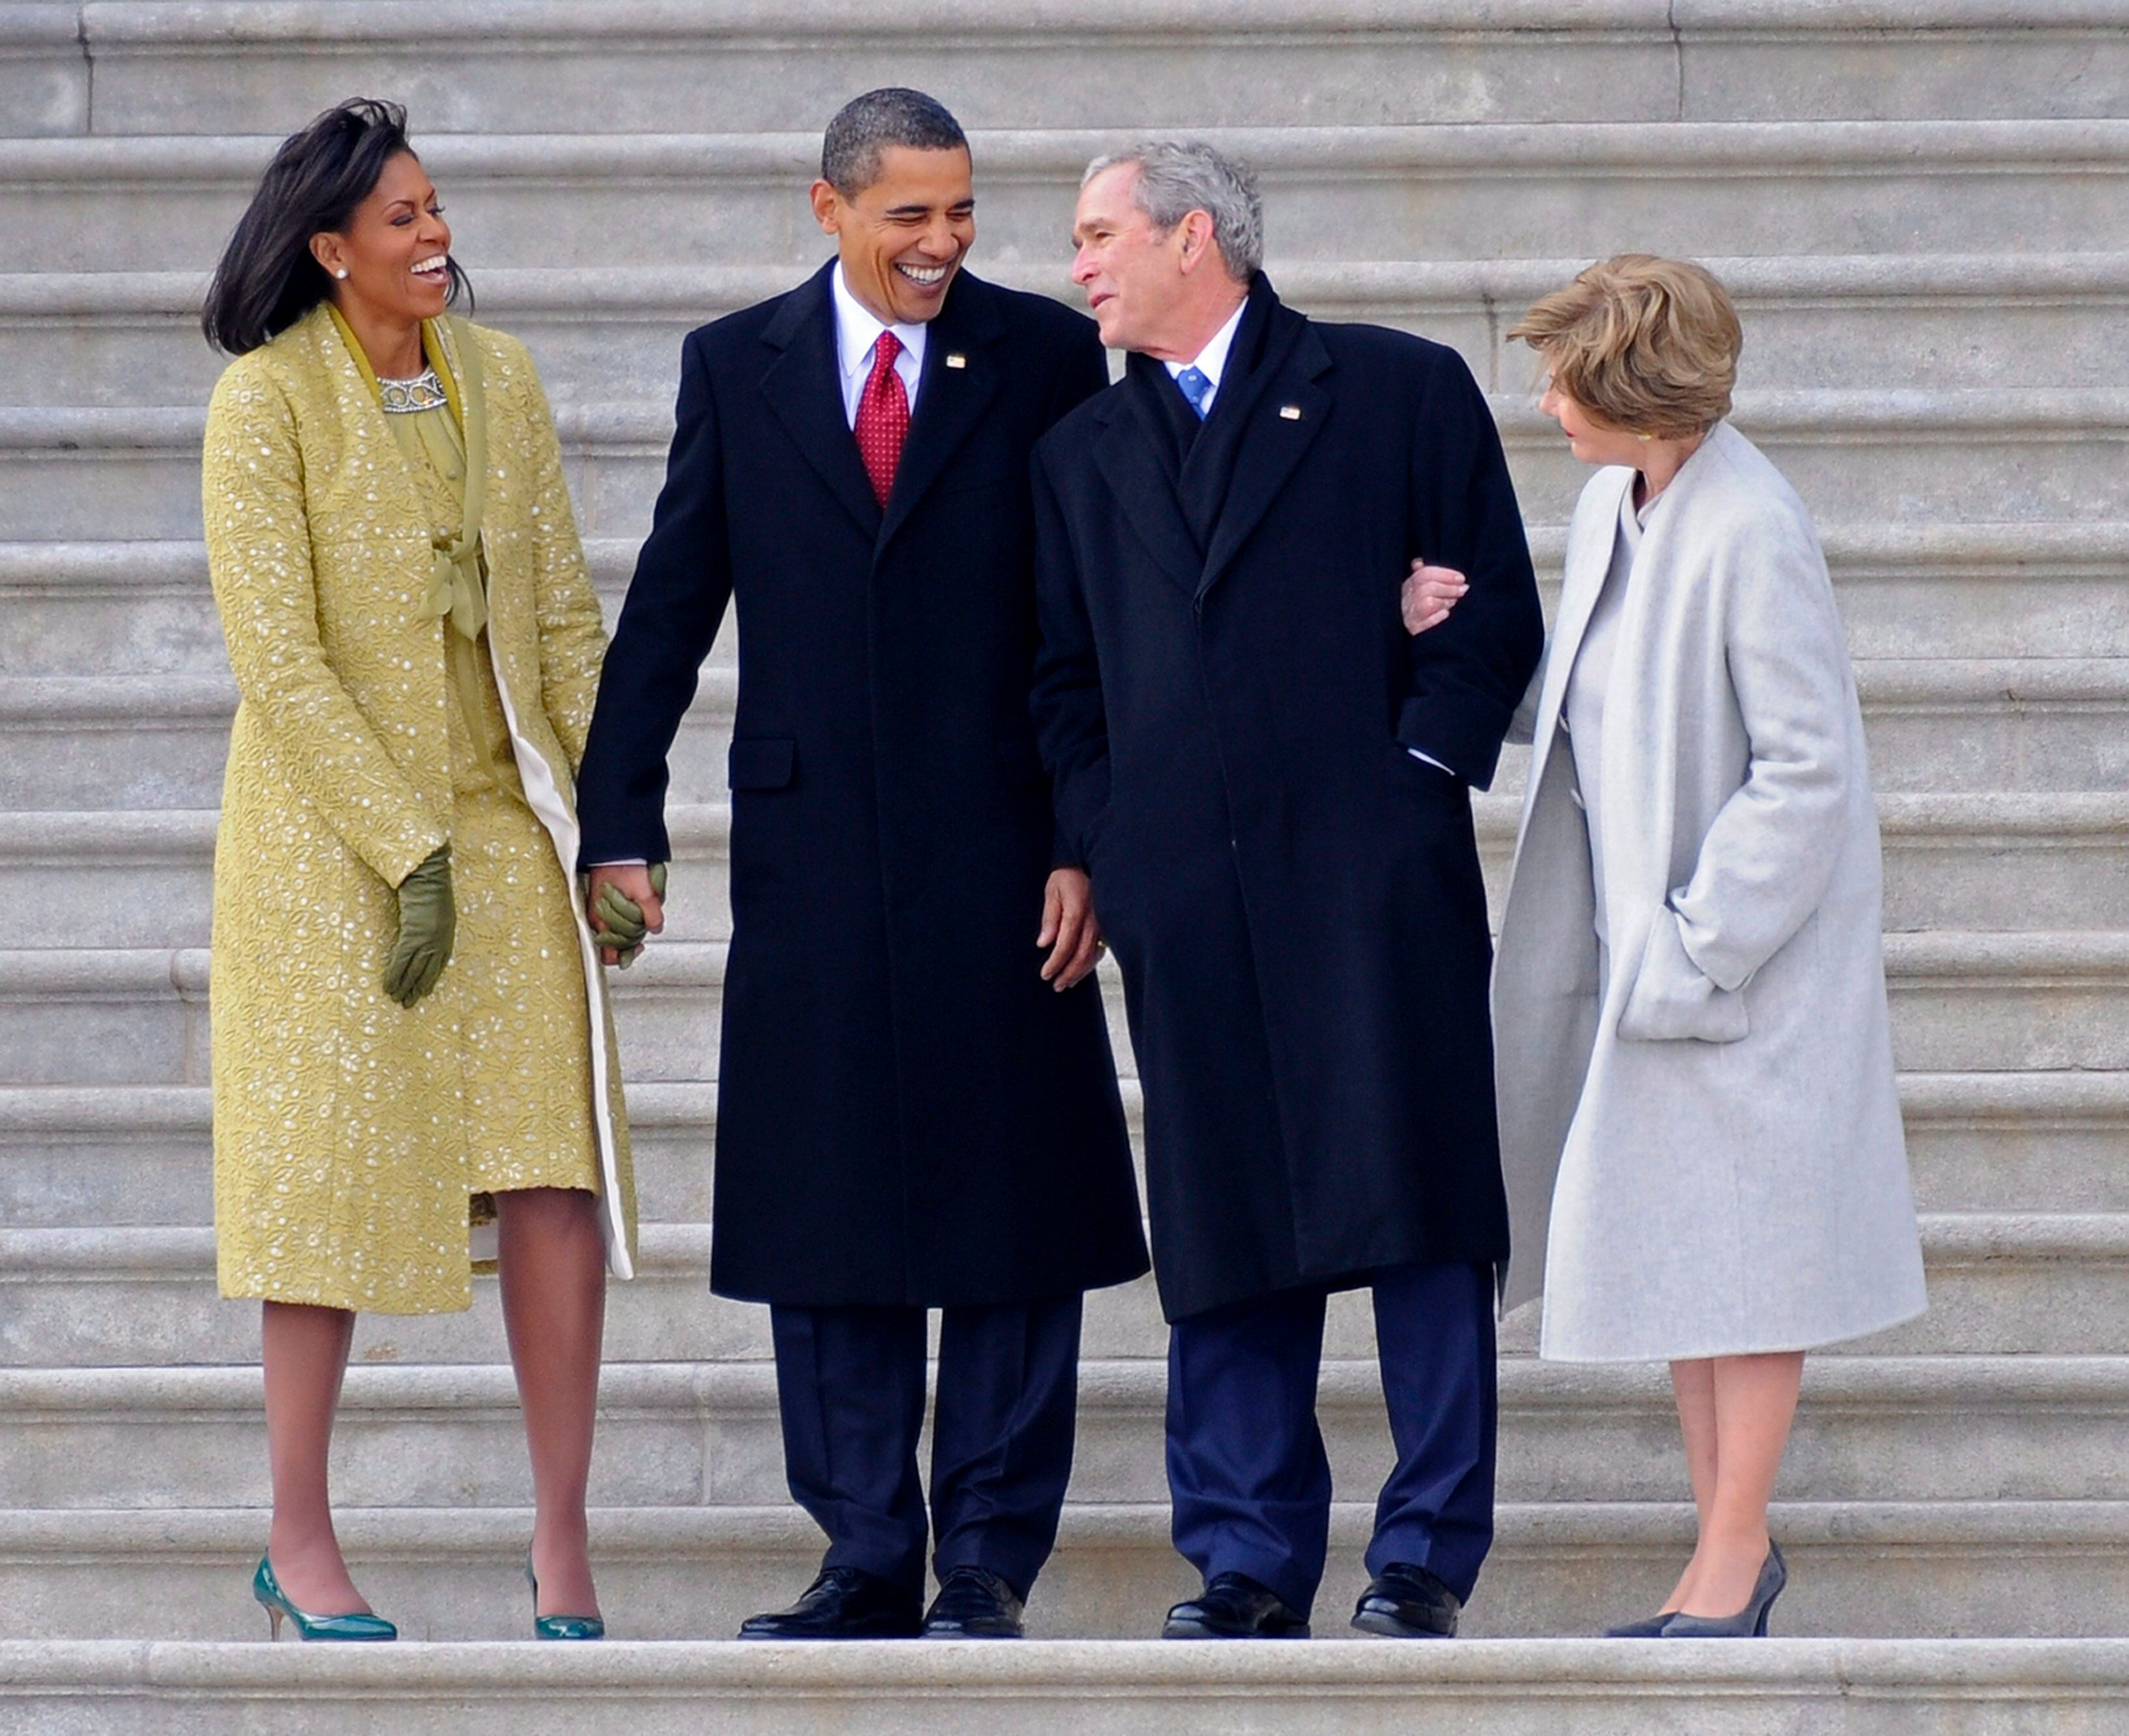 El matrimonio Obama en la toma de posesión de Barack Obama en enero de 2009, junto al matrimonio Bush, saliente de la Casa Blanca.